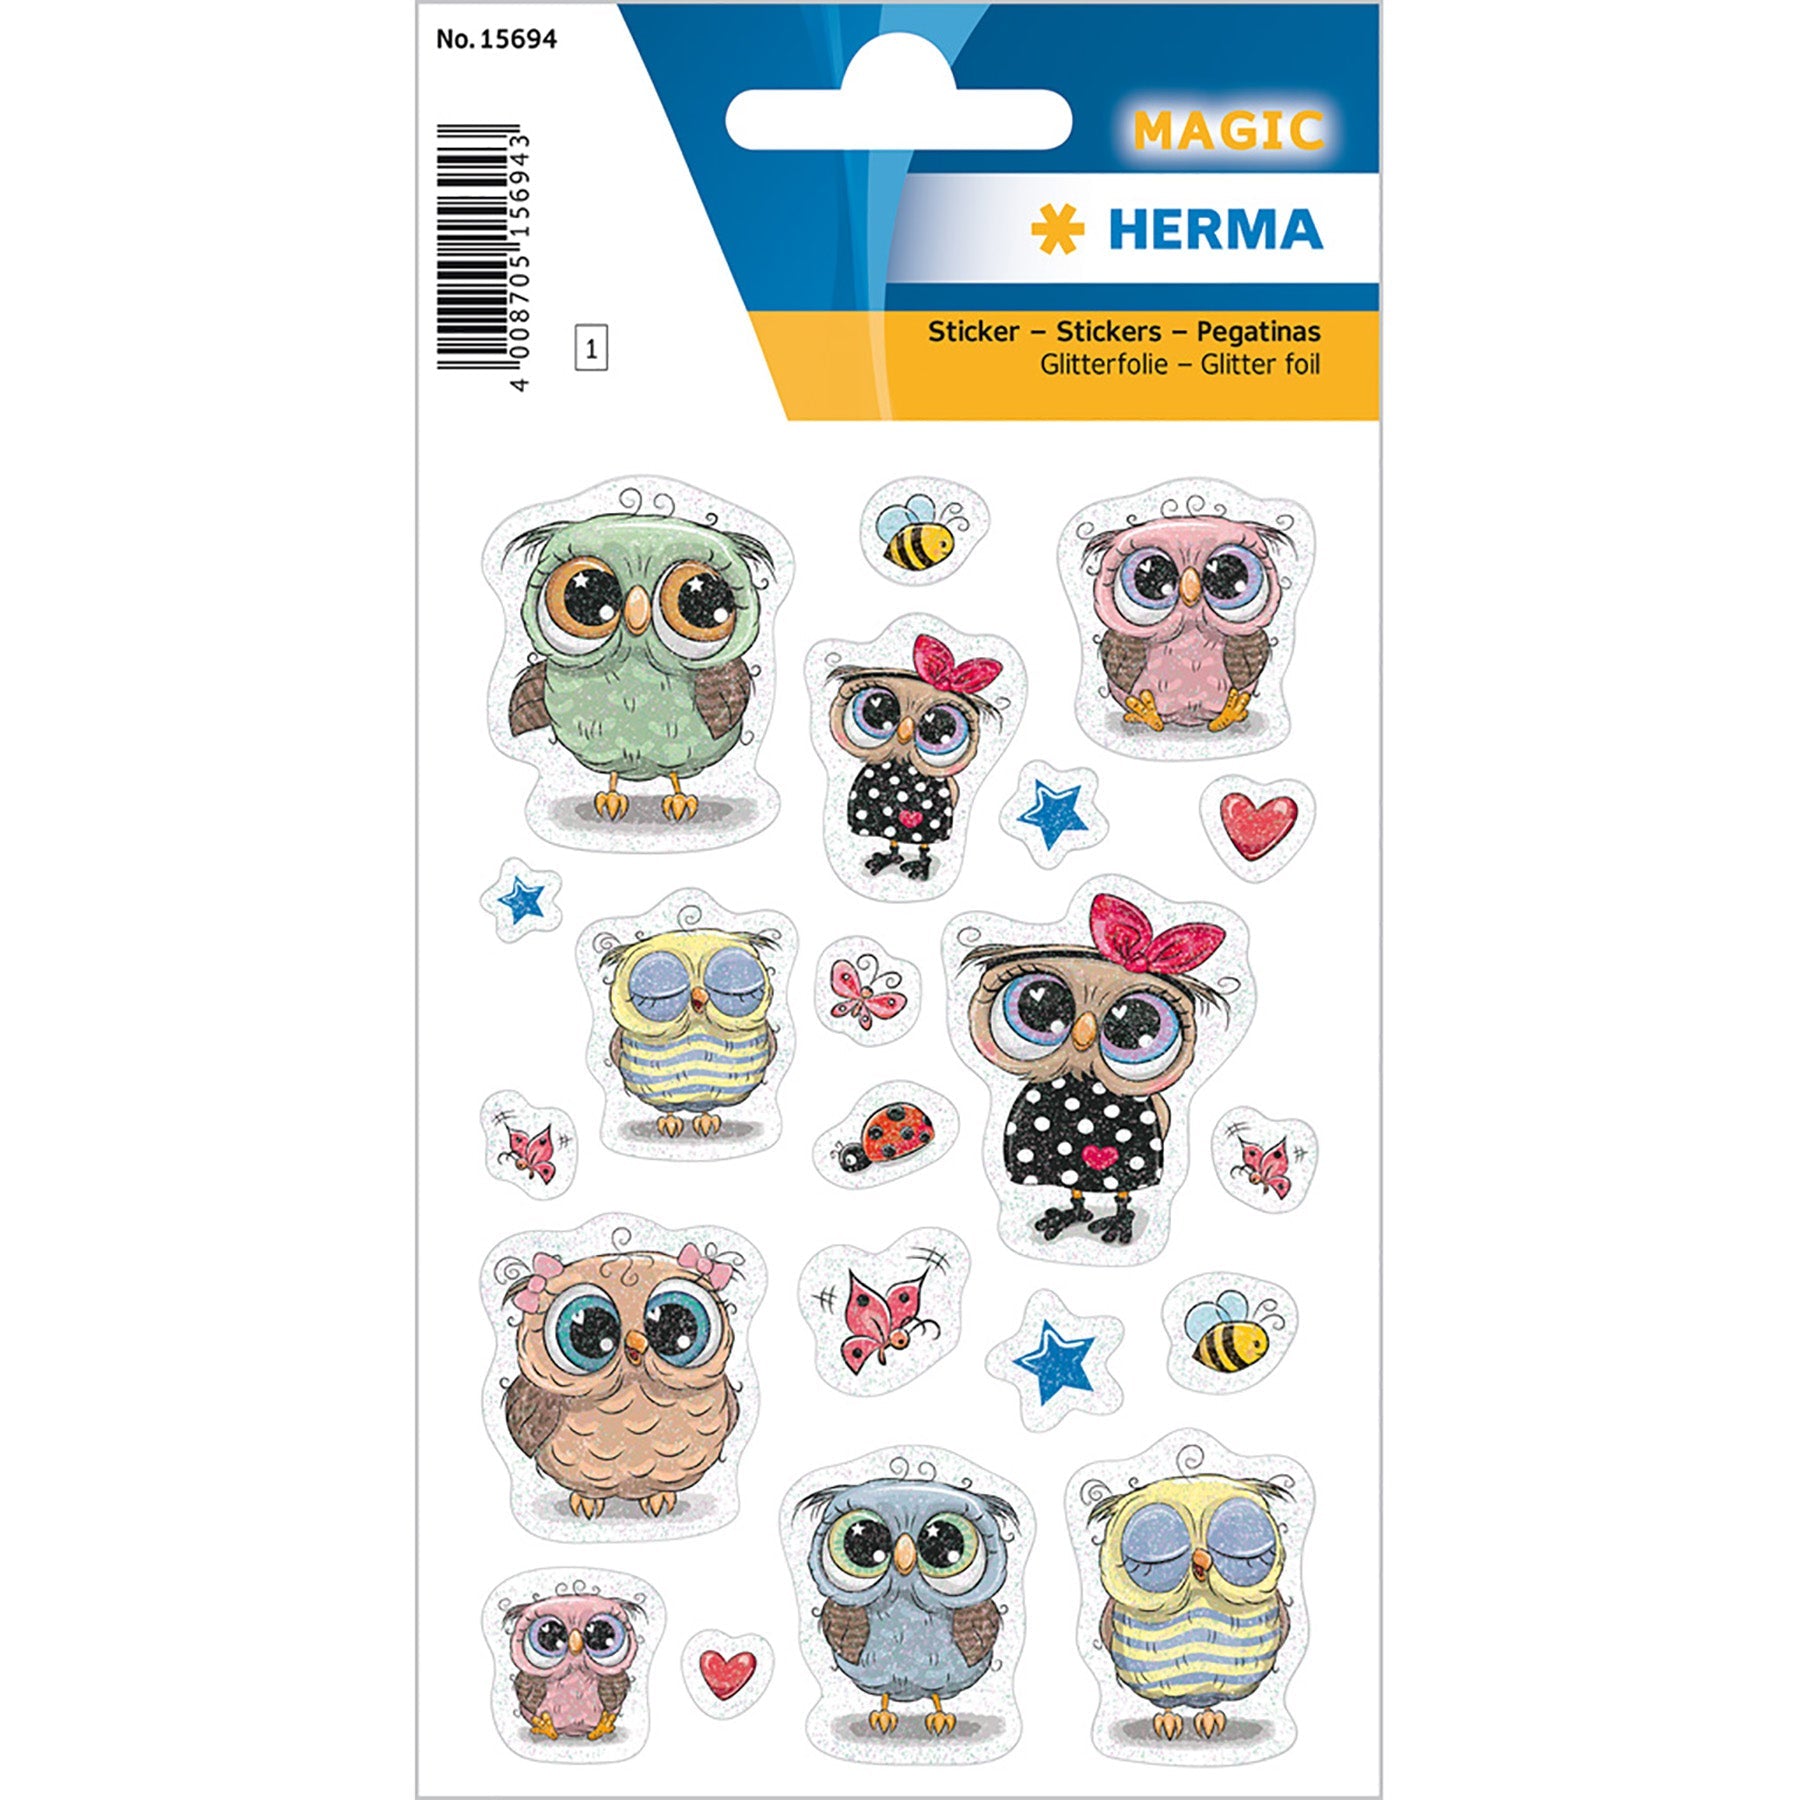 Herma Magic Stickers Little Owl Glitter Foil 4.75x3.1in Sheet